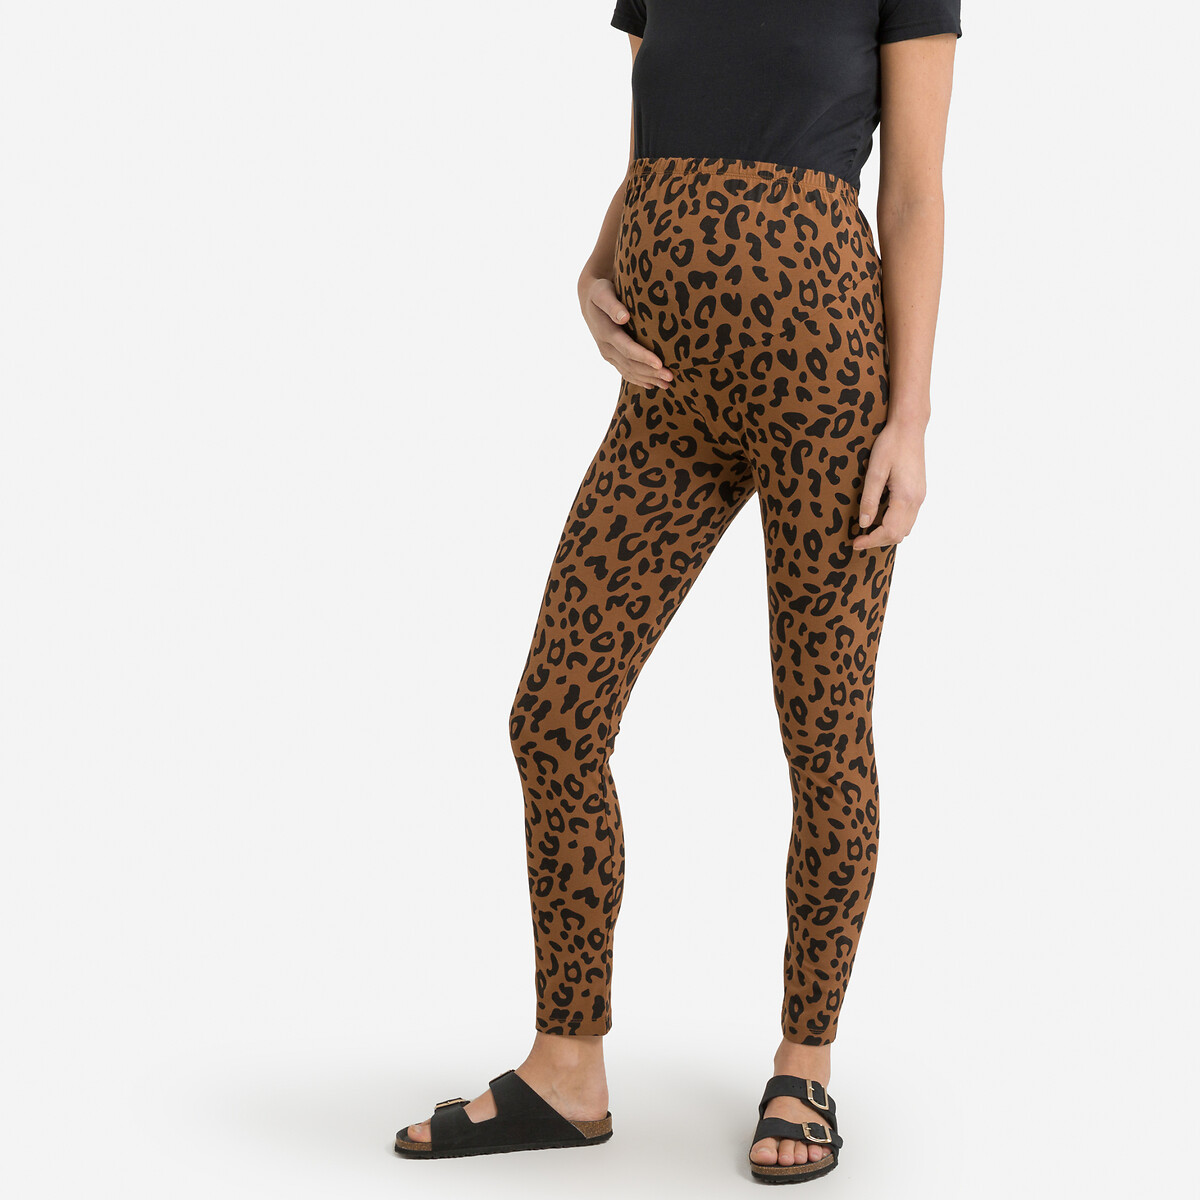 Leopard Print Maternity Leggings in Cotton, Length 27.5"